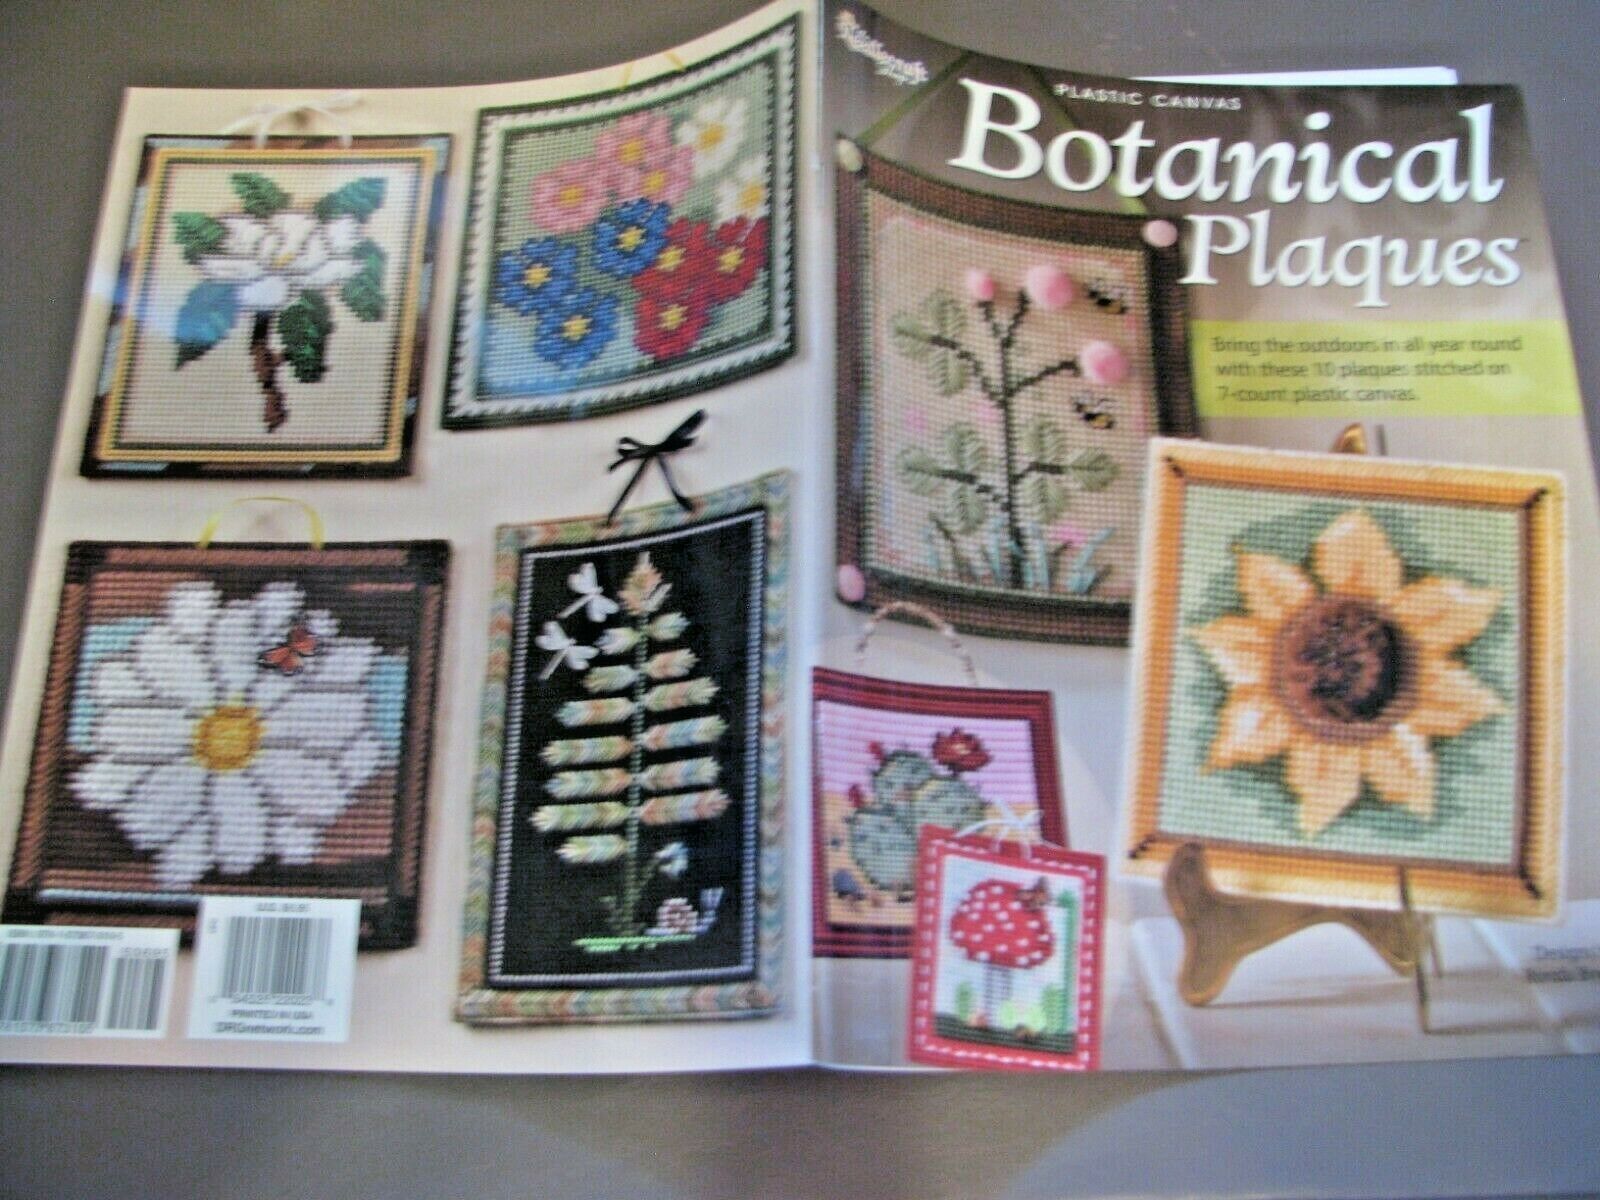 Botanical Plaques Plastic Canvas Pattern Book Needlecraft Shop